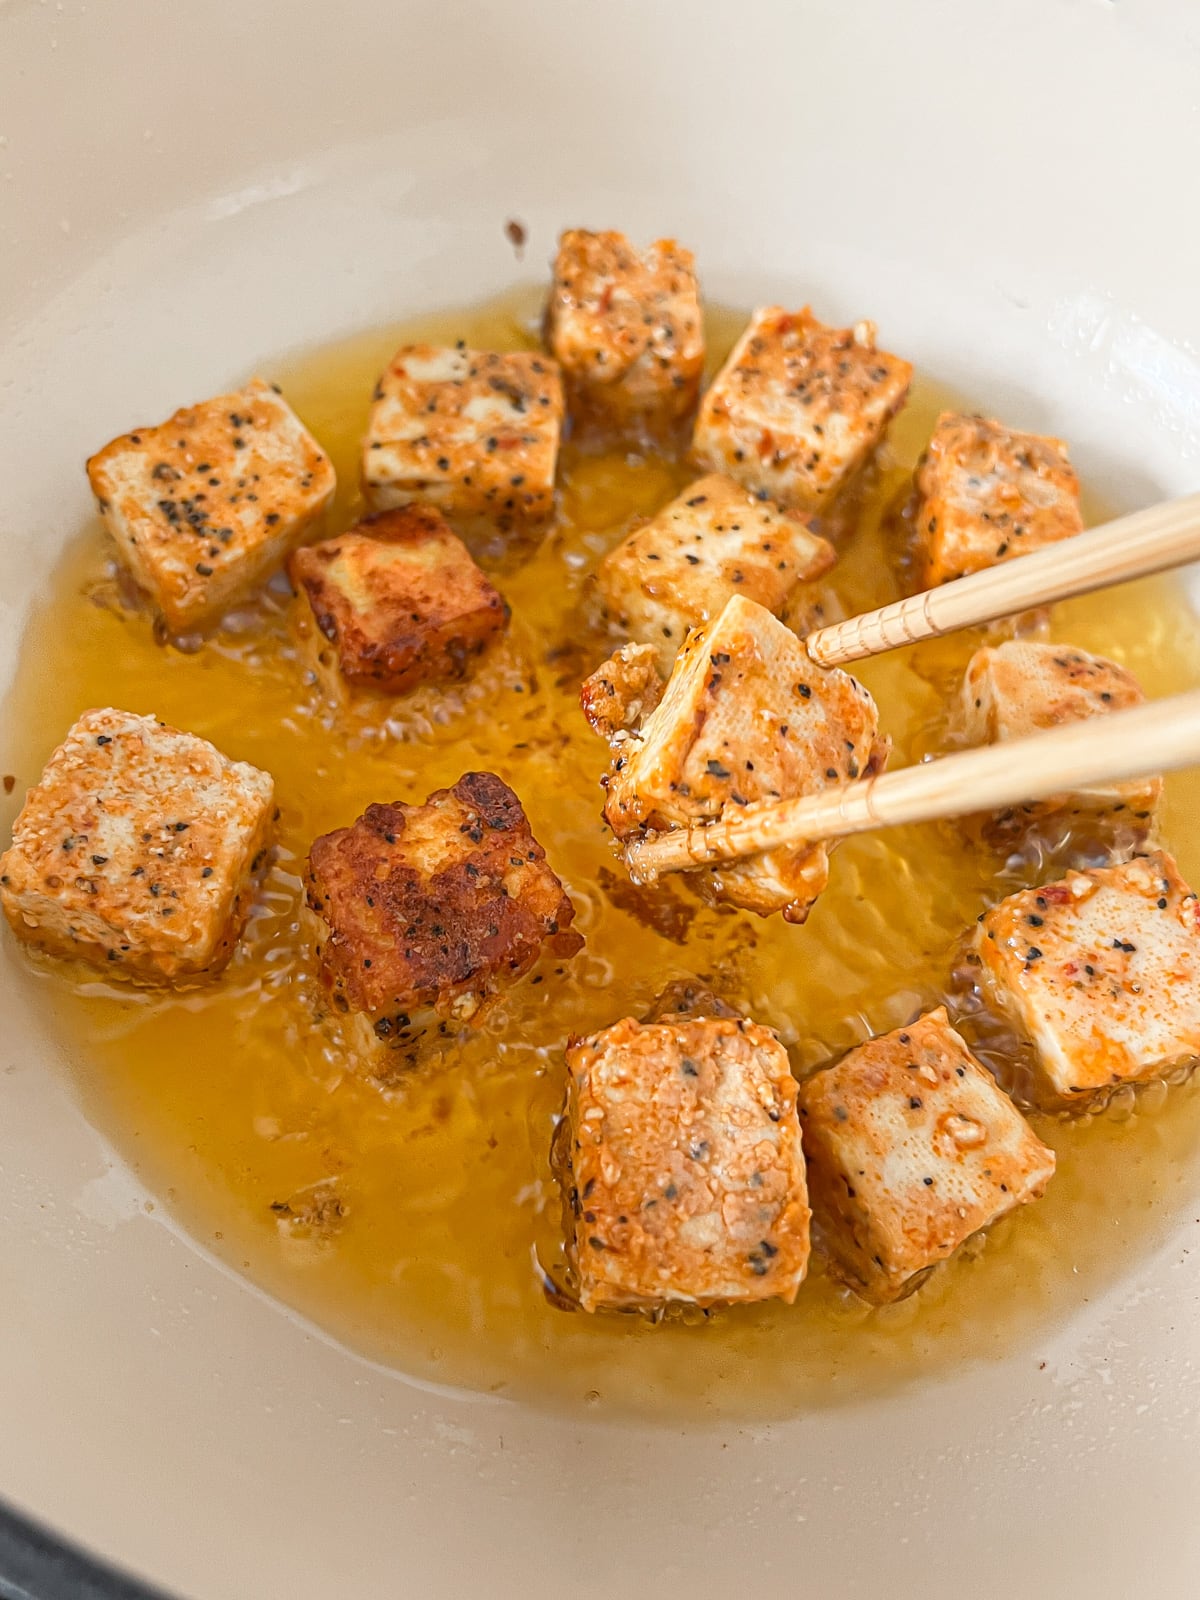 Tofu cubes frying in a hot pan.